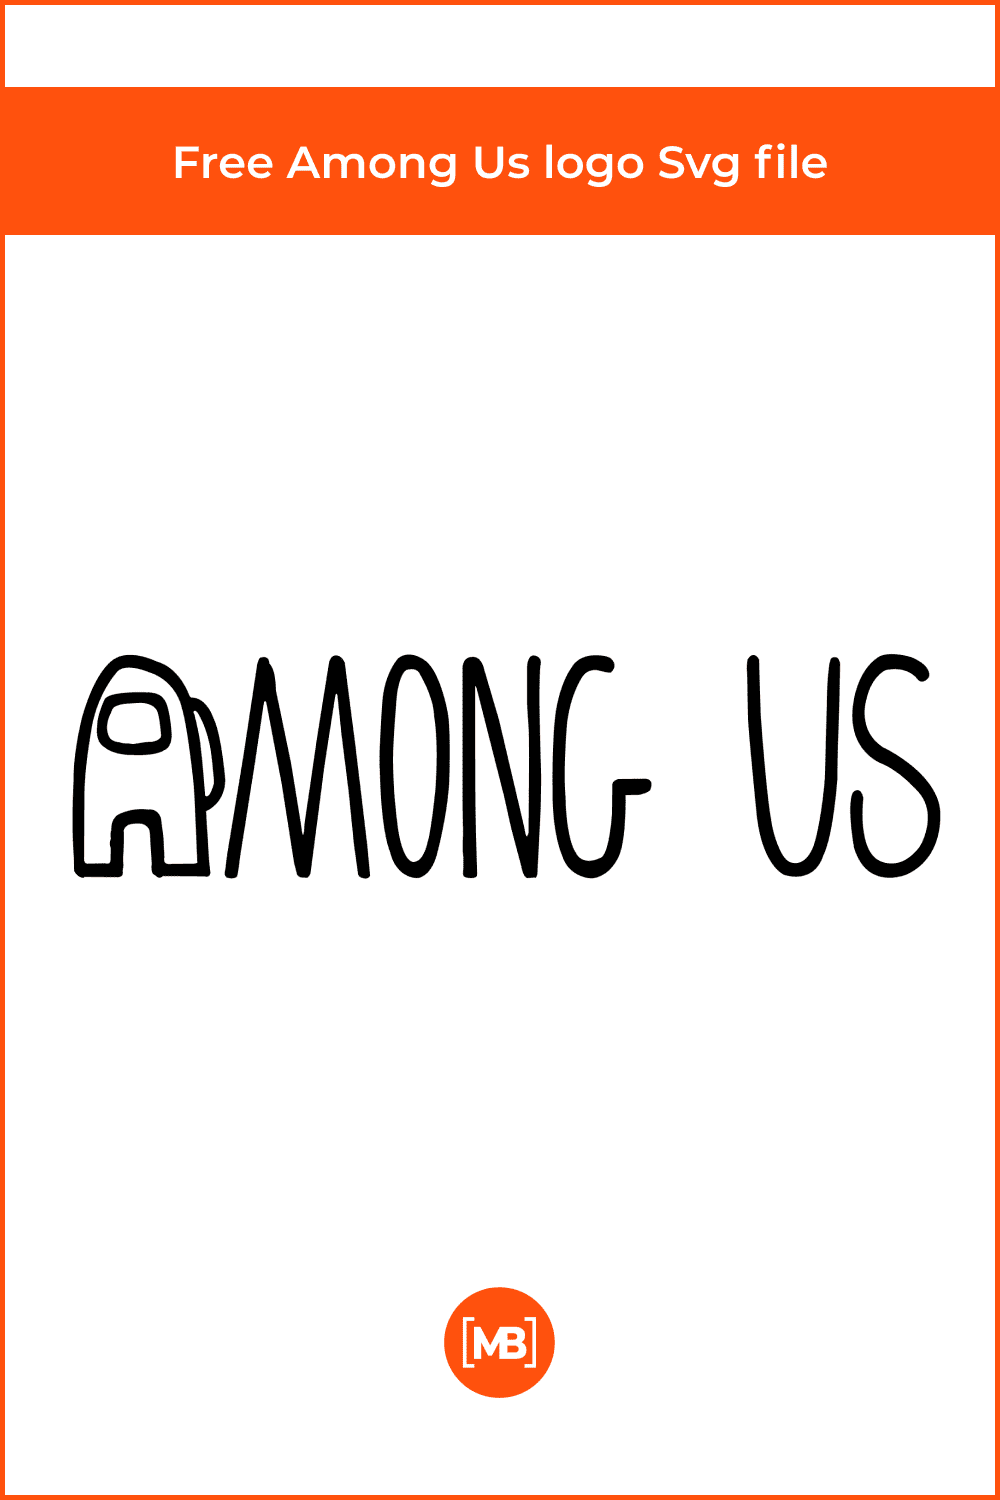 Free Among Us logo Svg file.